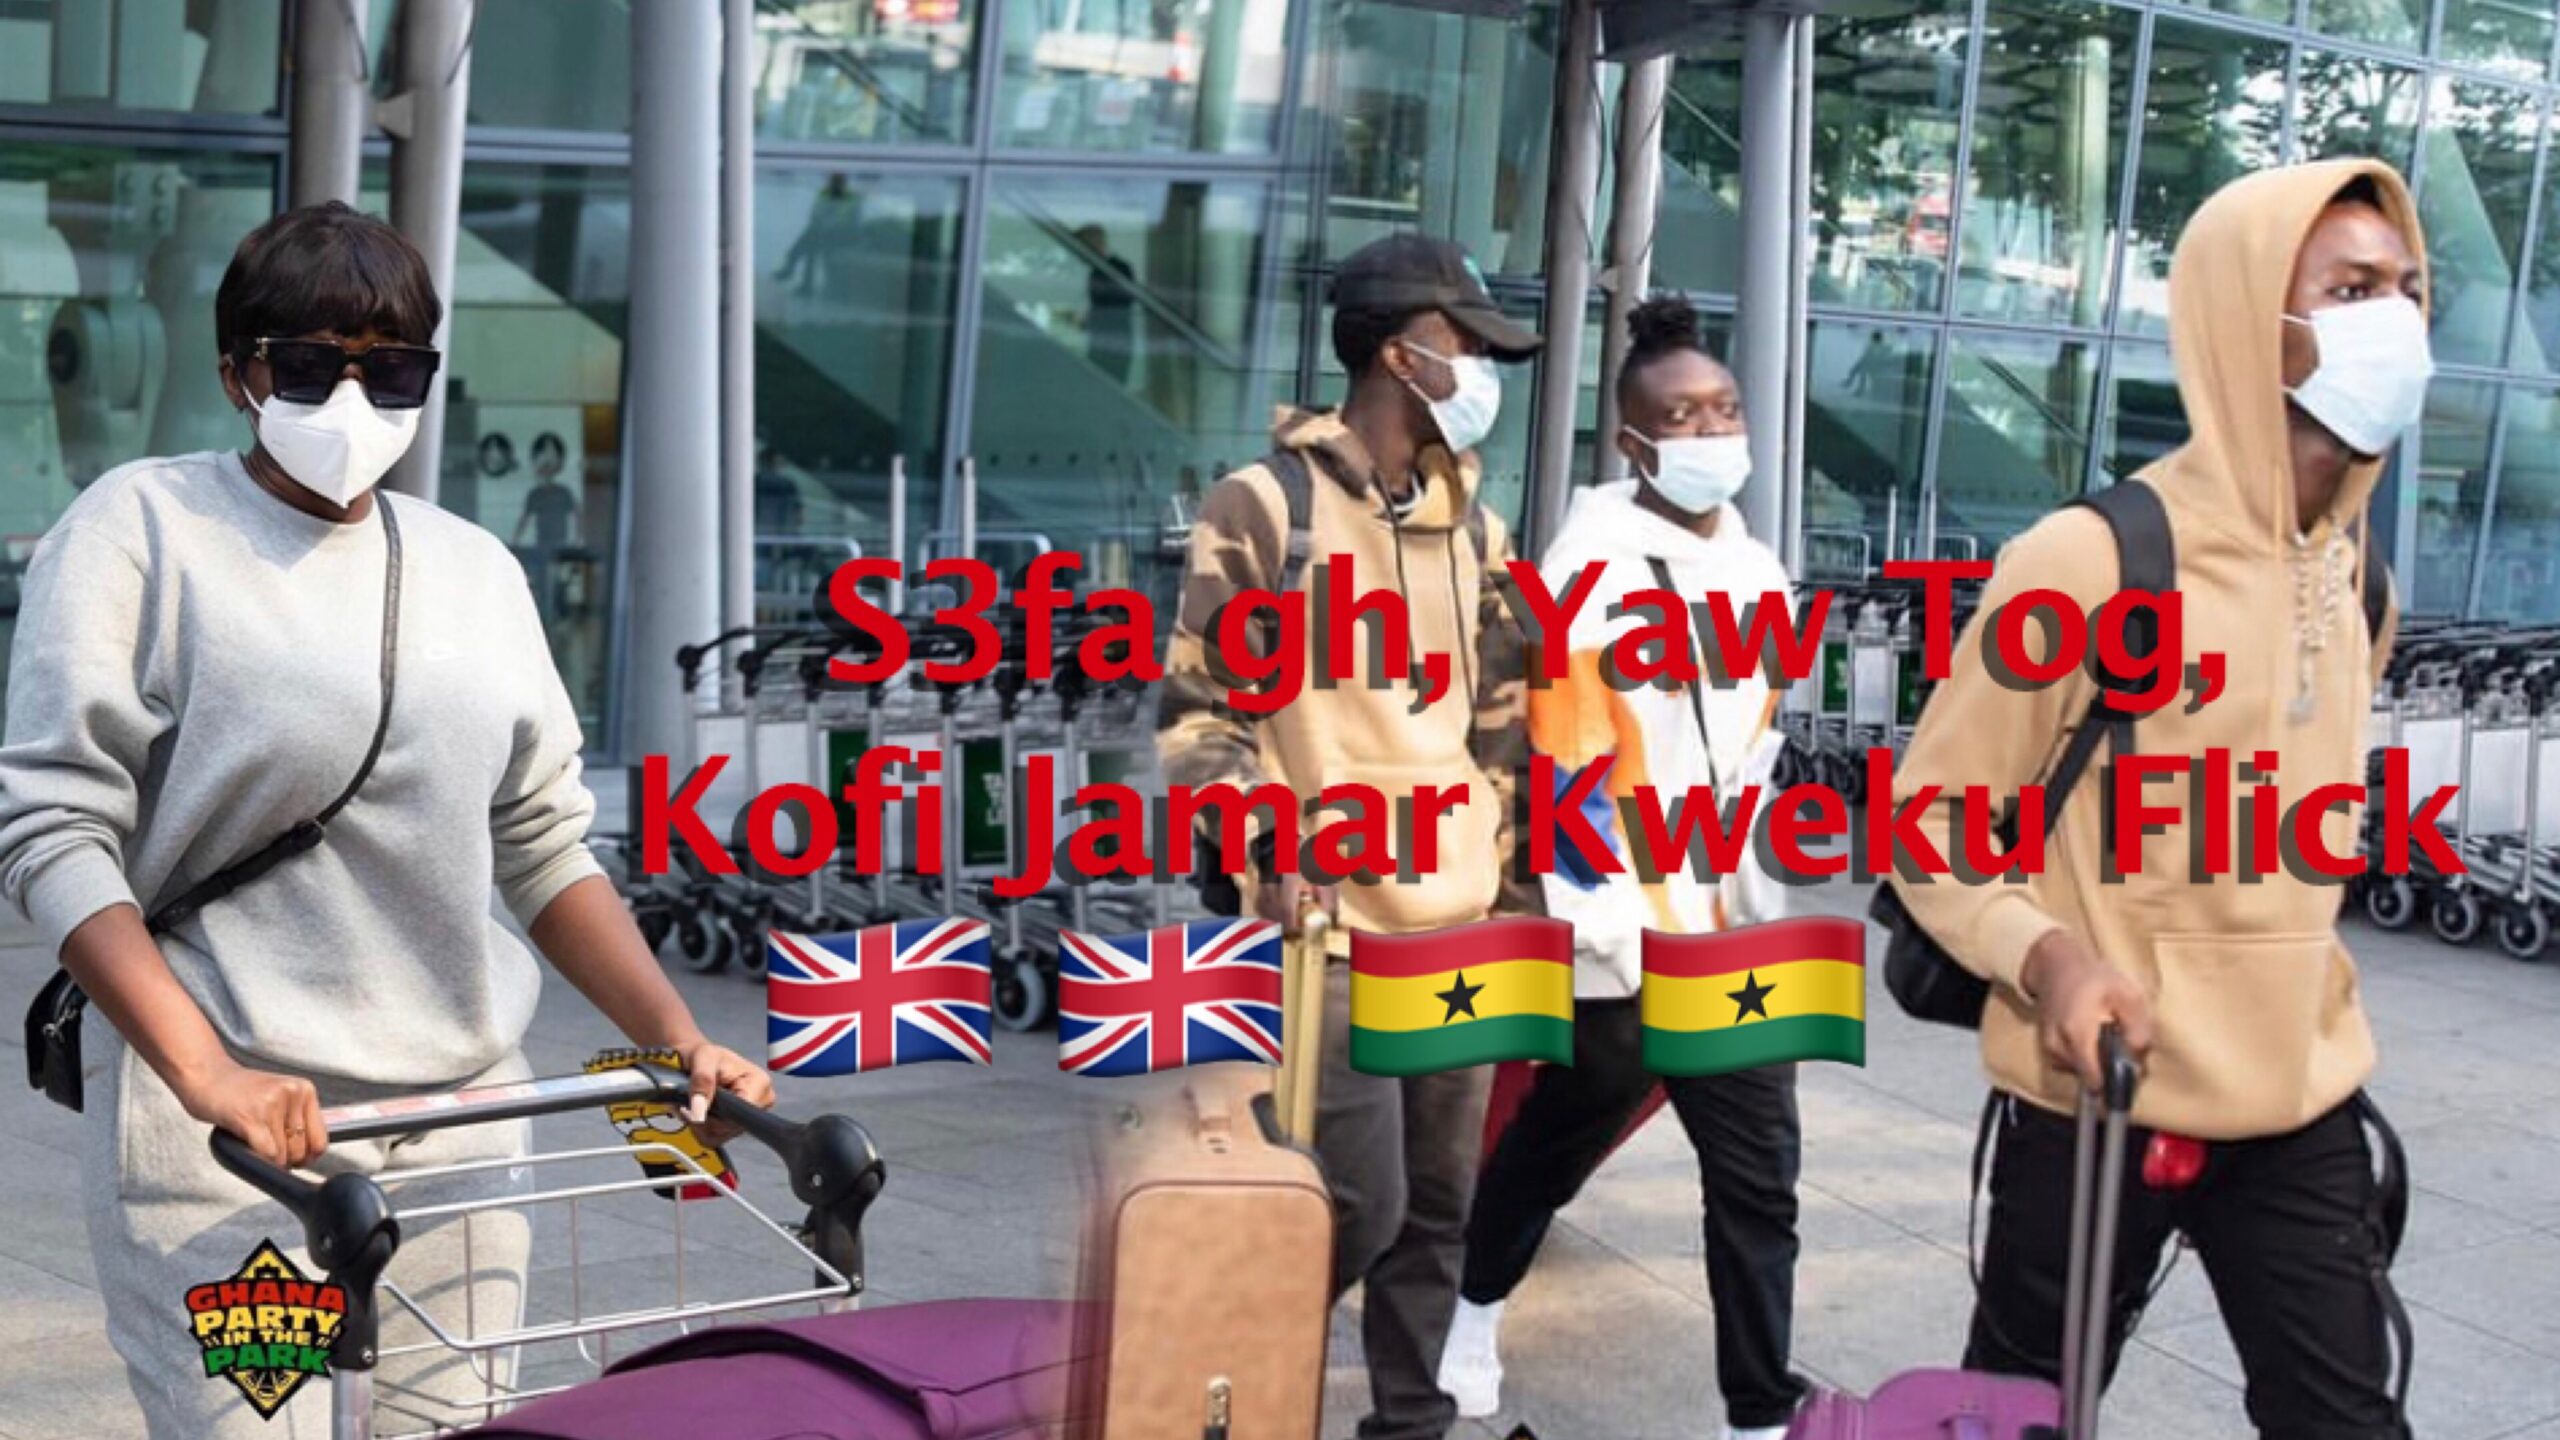 Ghana music stars meet in London for Ghana Party in the Park